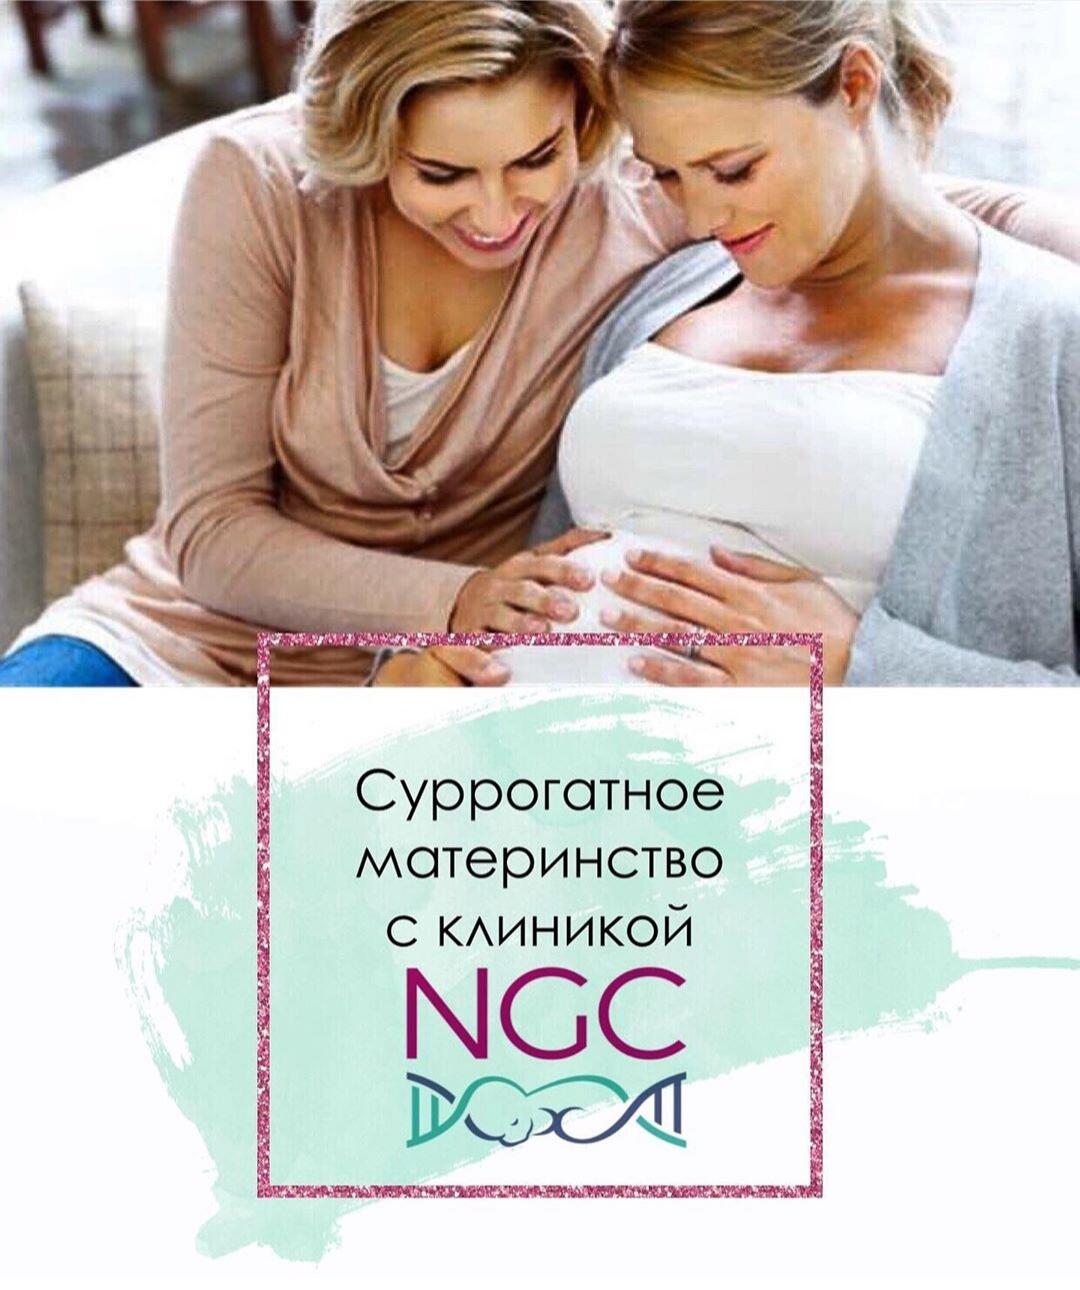 Найти суррогатную мать. Центр суррогатного материнства. Реклама суррогатного материнства. Клиника суррогатного материнства в Москве. Ищем суррогатную мать.